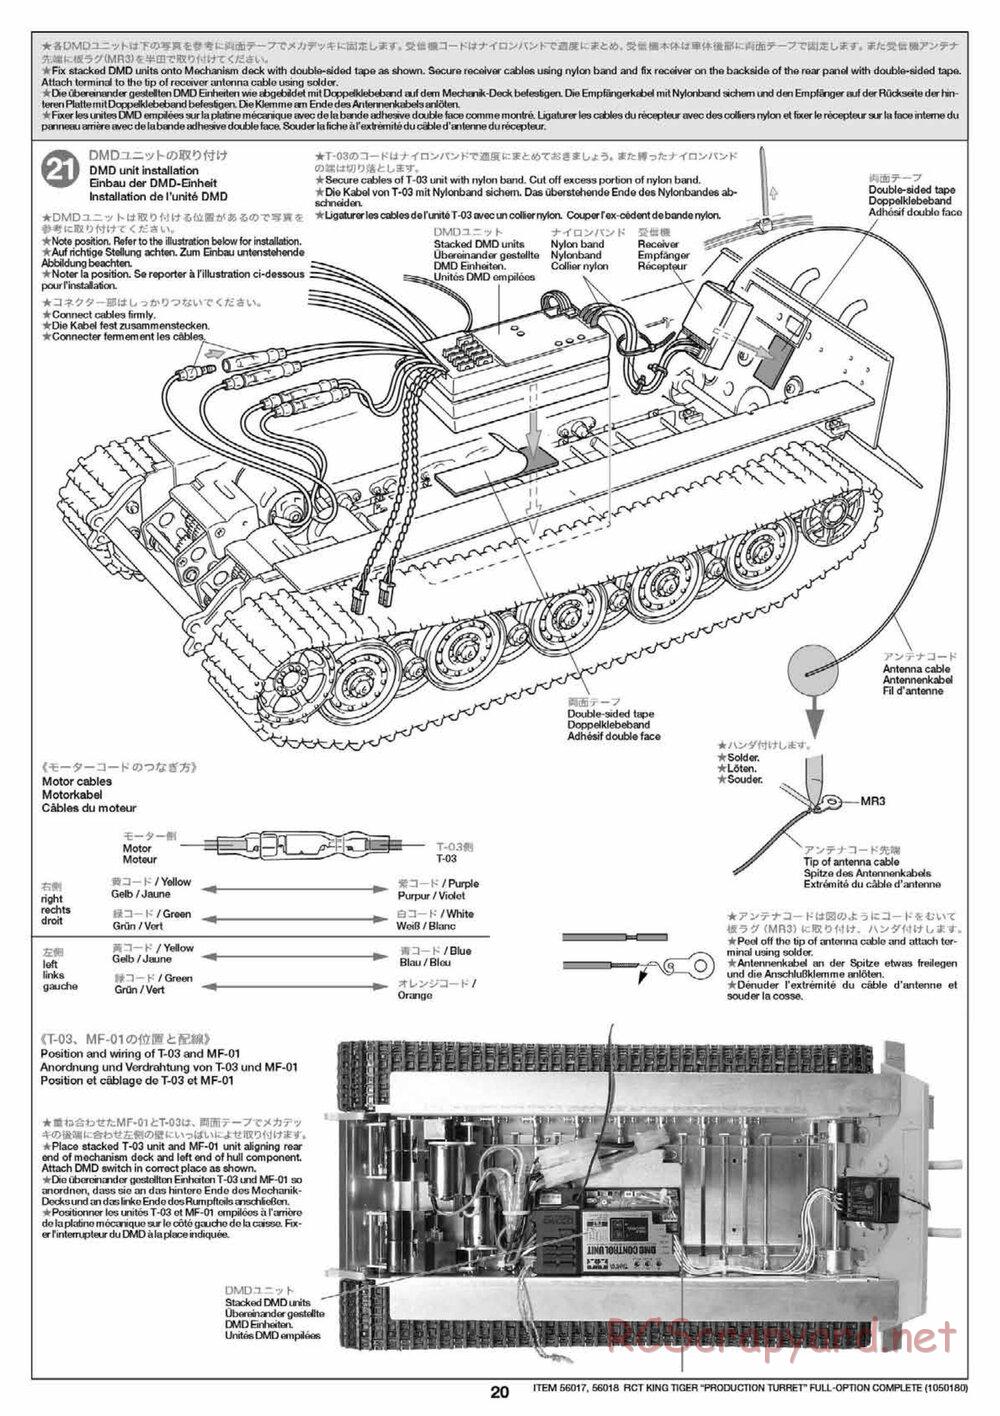 Tamiya - King Tiger - 1/16 Scale Chassis - Manual - Page 20